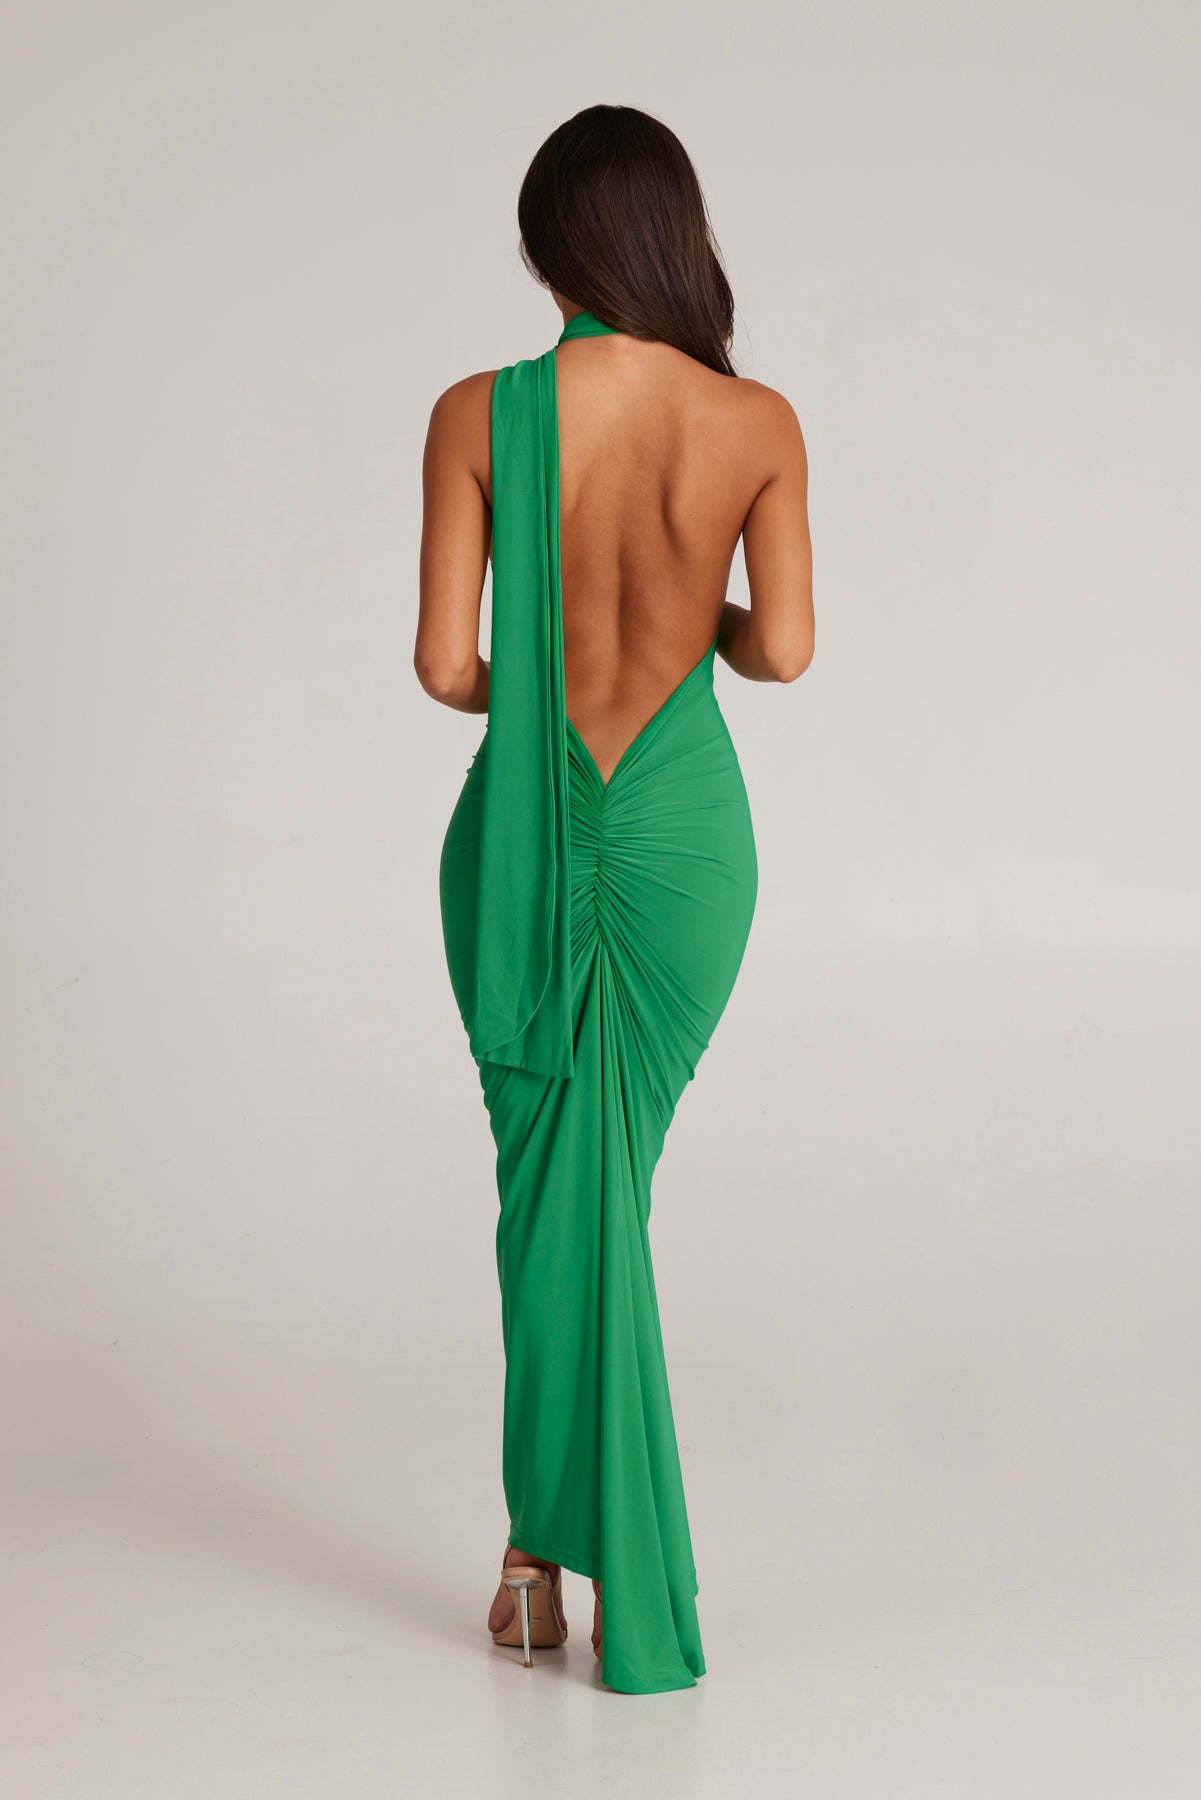 MÉLANI The Label LEONI Green Asymmetric Halter Neck Form Fitted Midi Dress